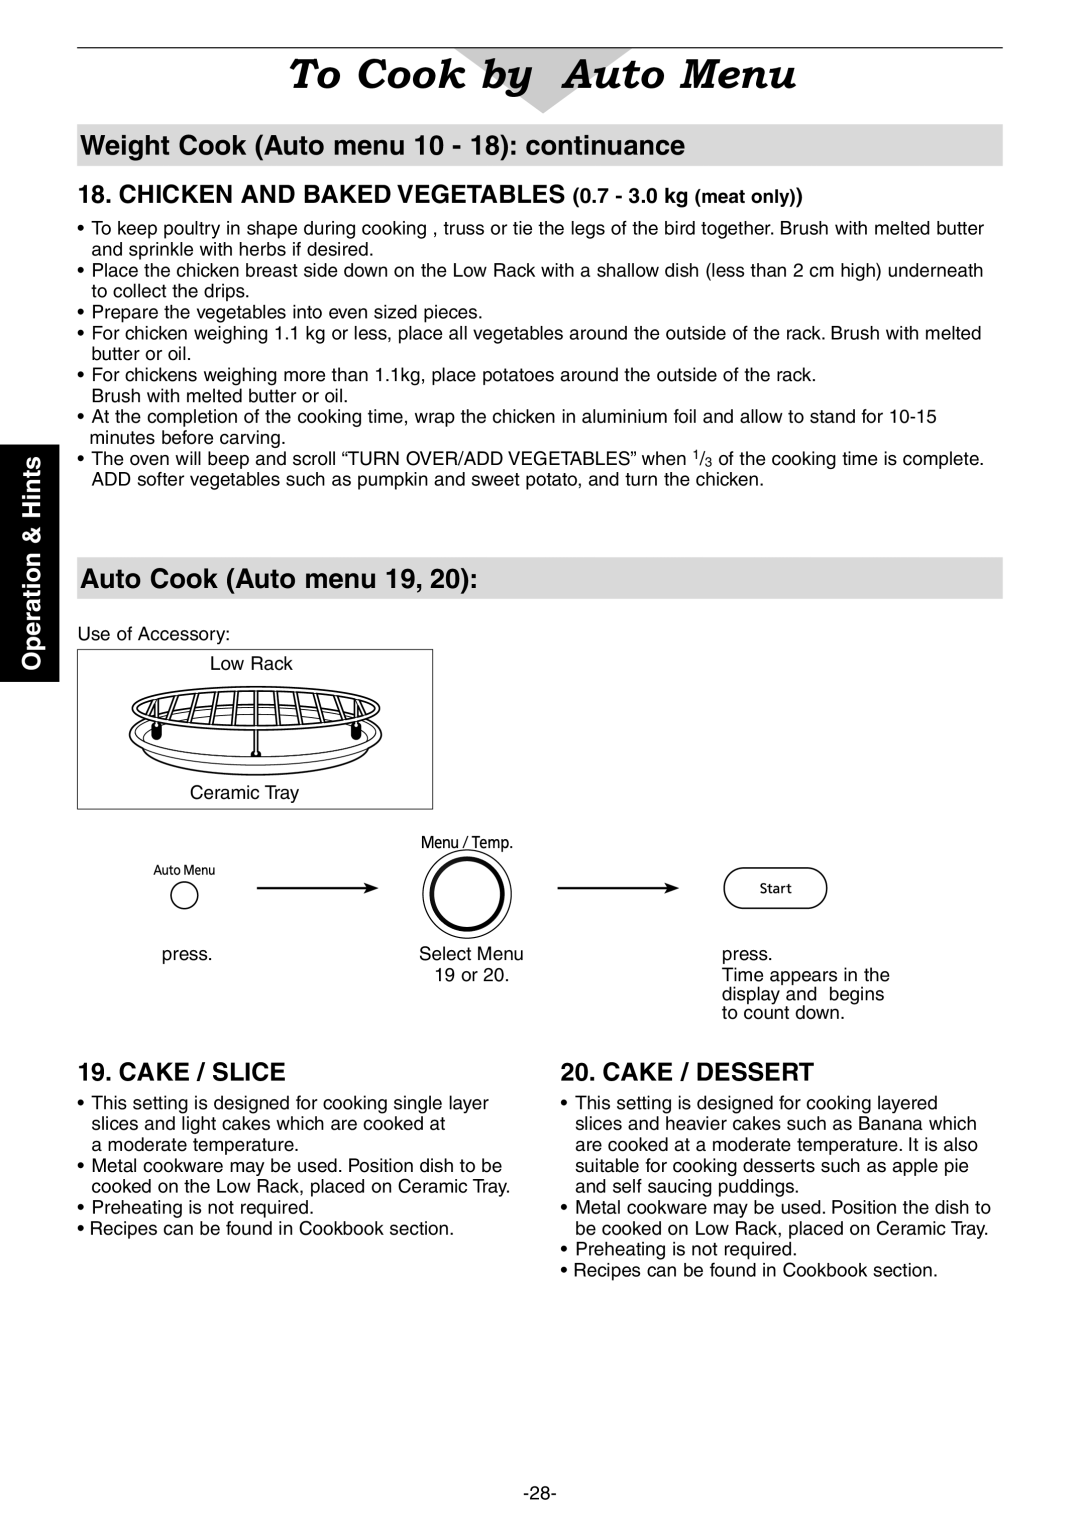 Panasonic NN-CD987W manual Weight Cook Auto menu 10 - 18 continuance, Auto Cook Auto menu, Cake / Slice, Cake / Dessert 